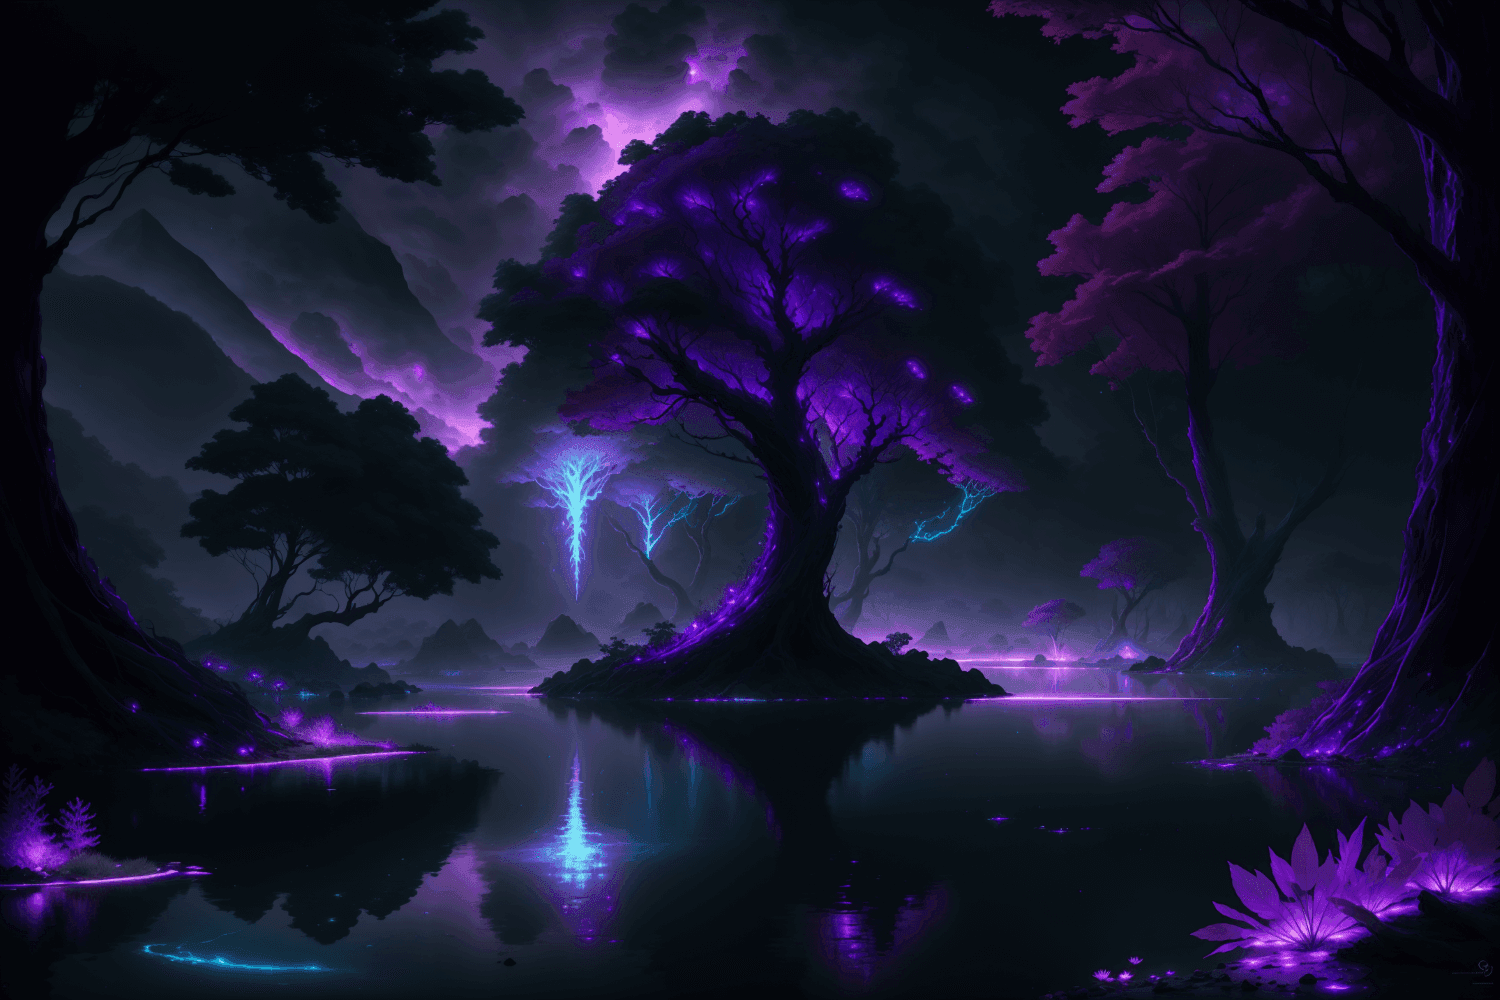 A large glowing purple tree on an island